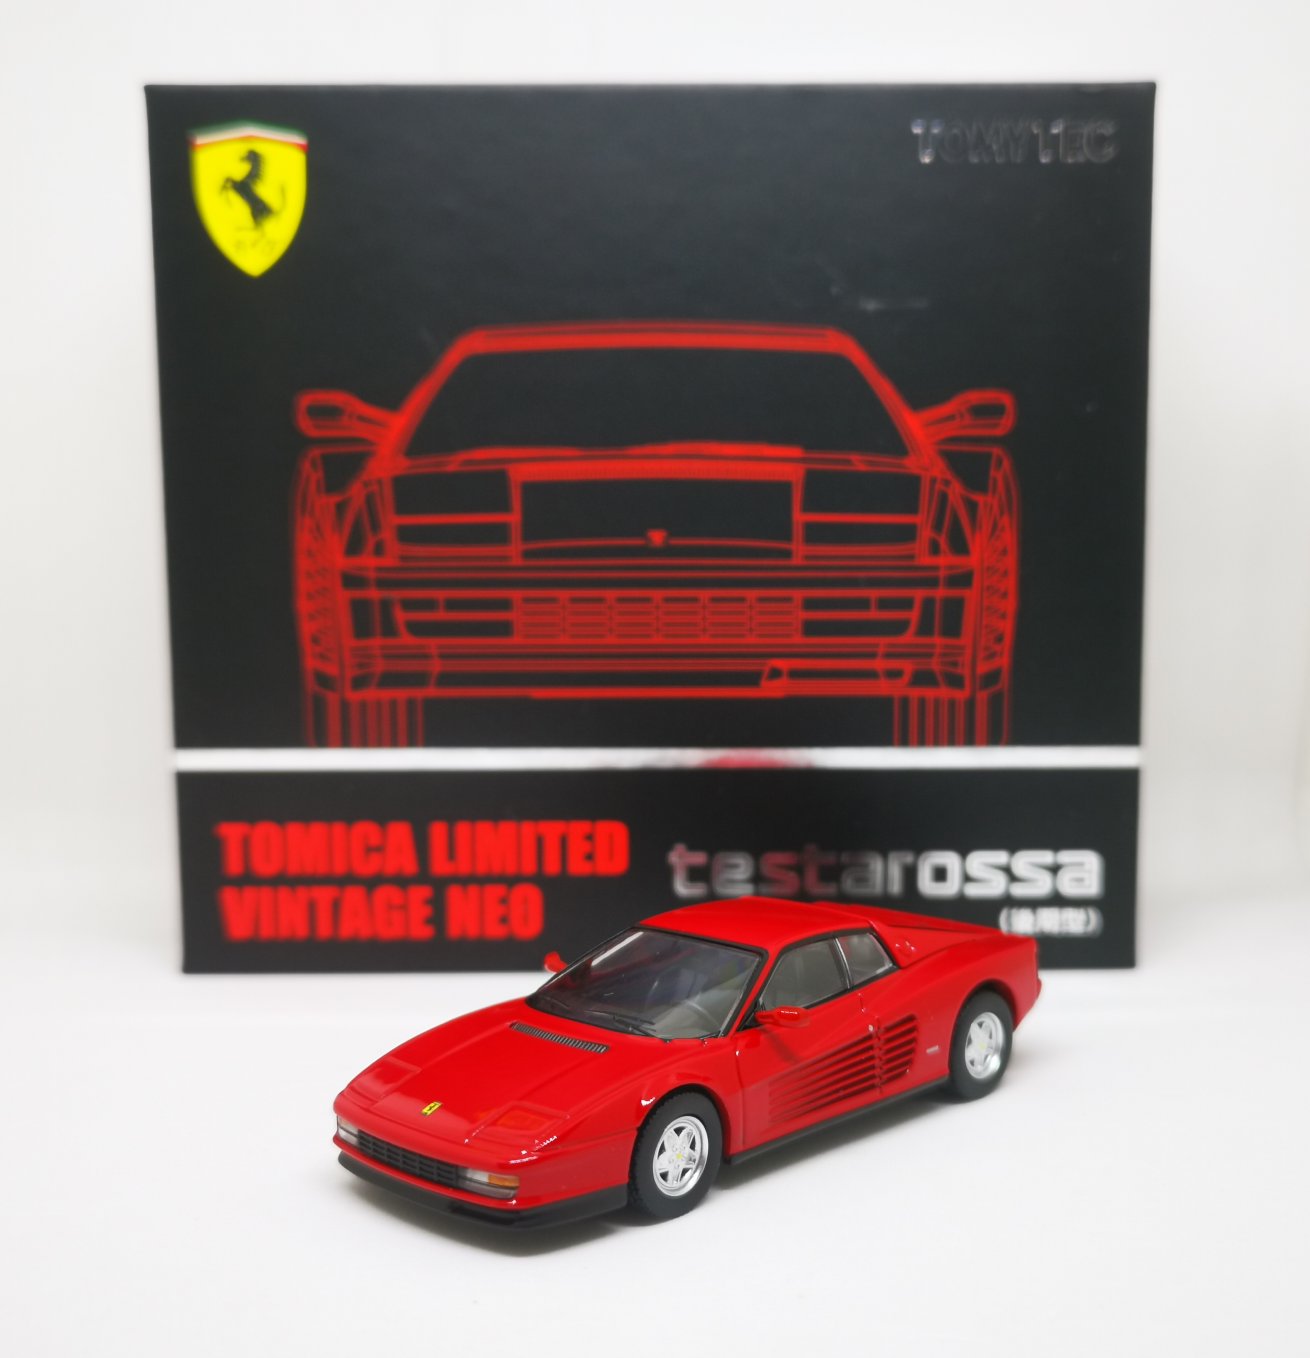 Tomica Limited Vintage Neo
Ferrari Testarossa